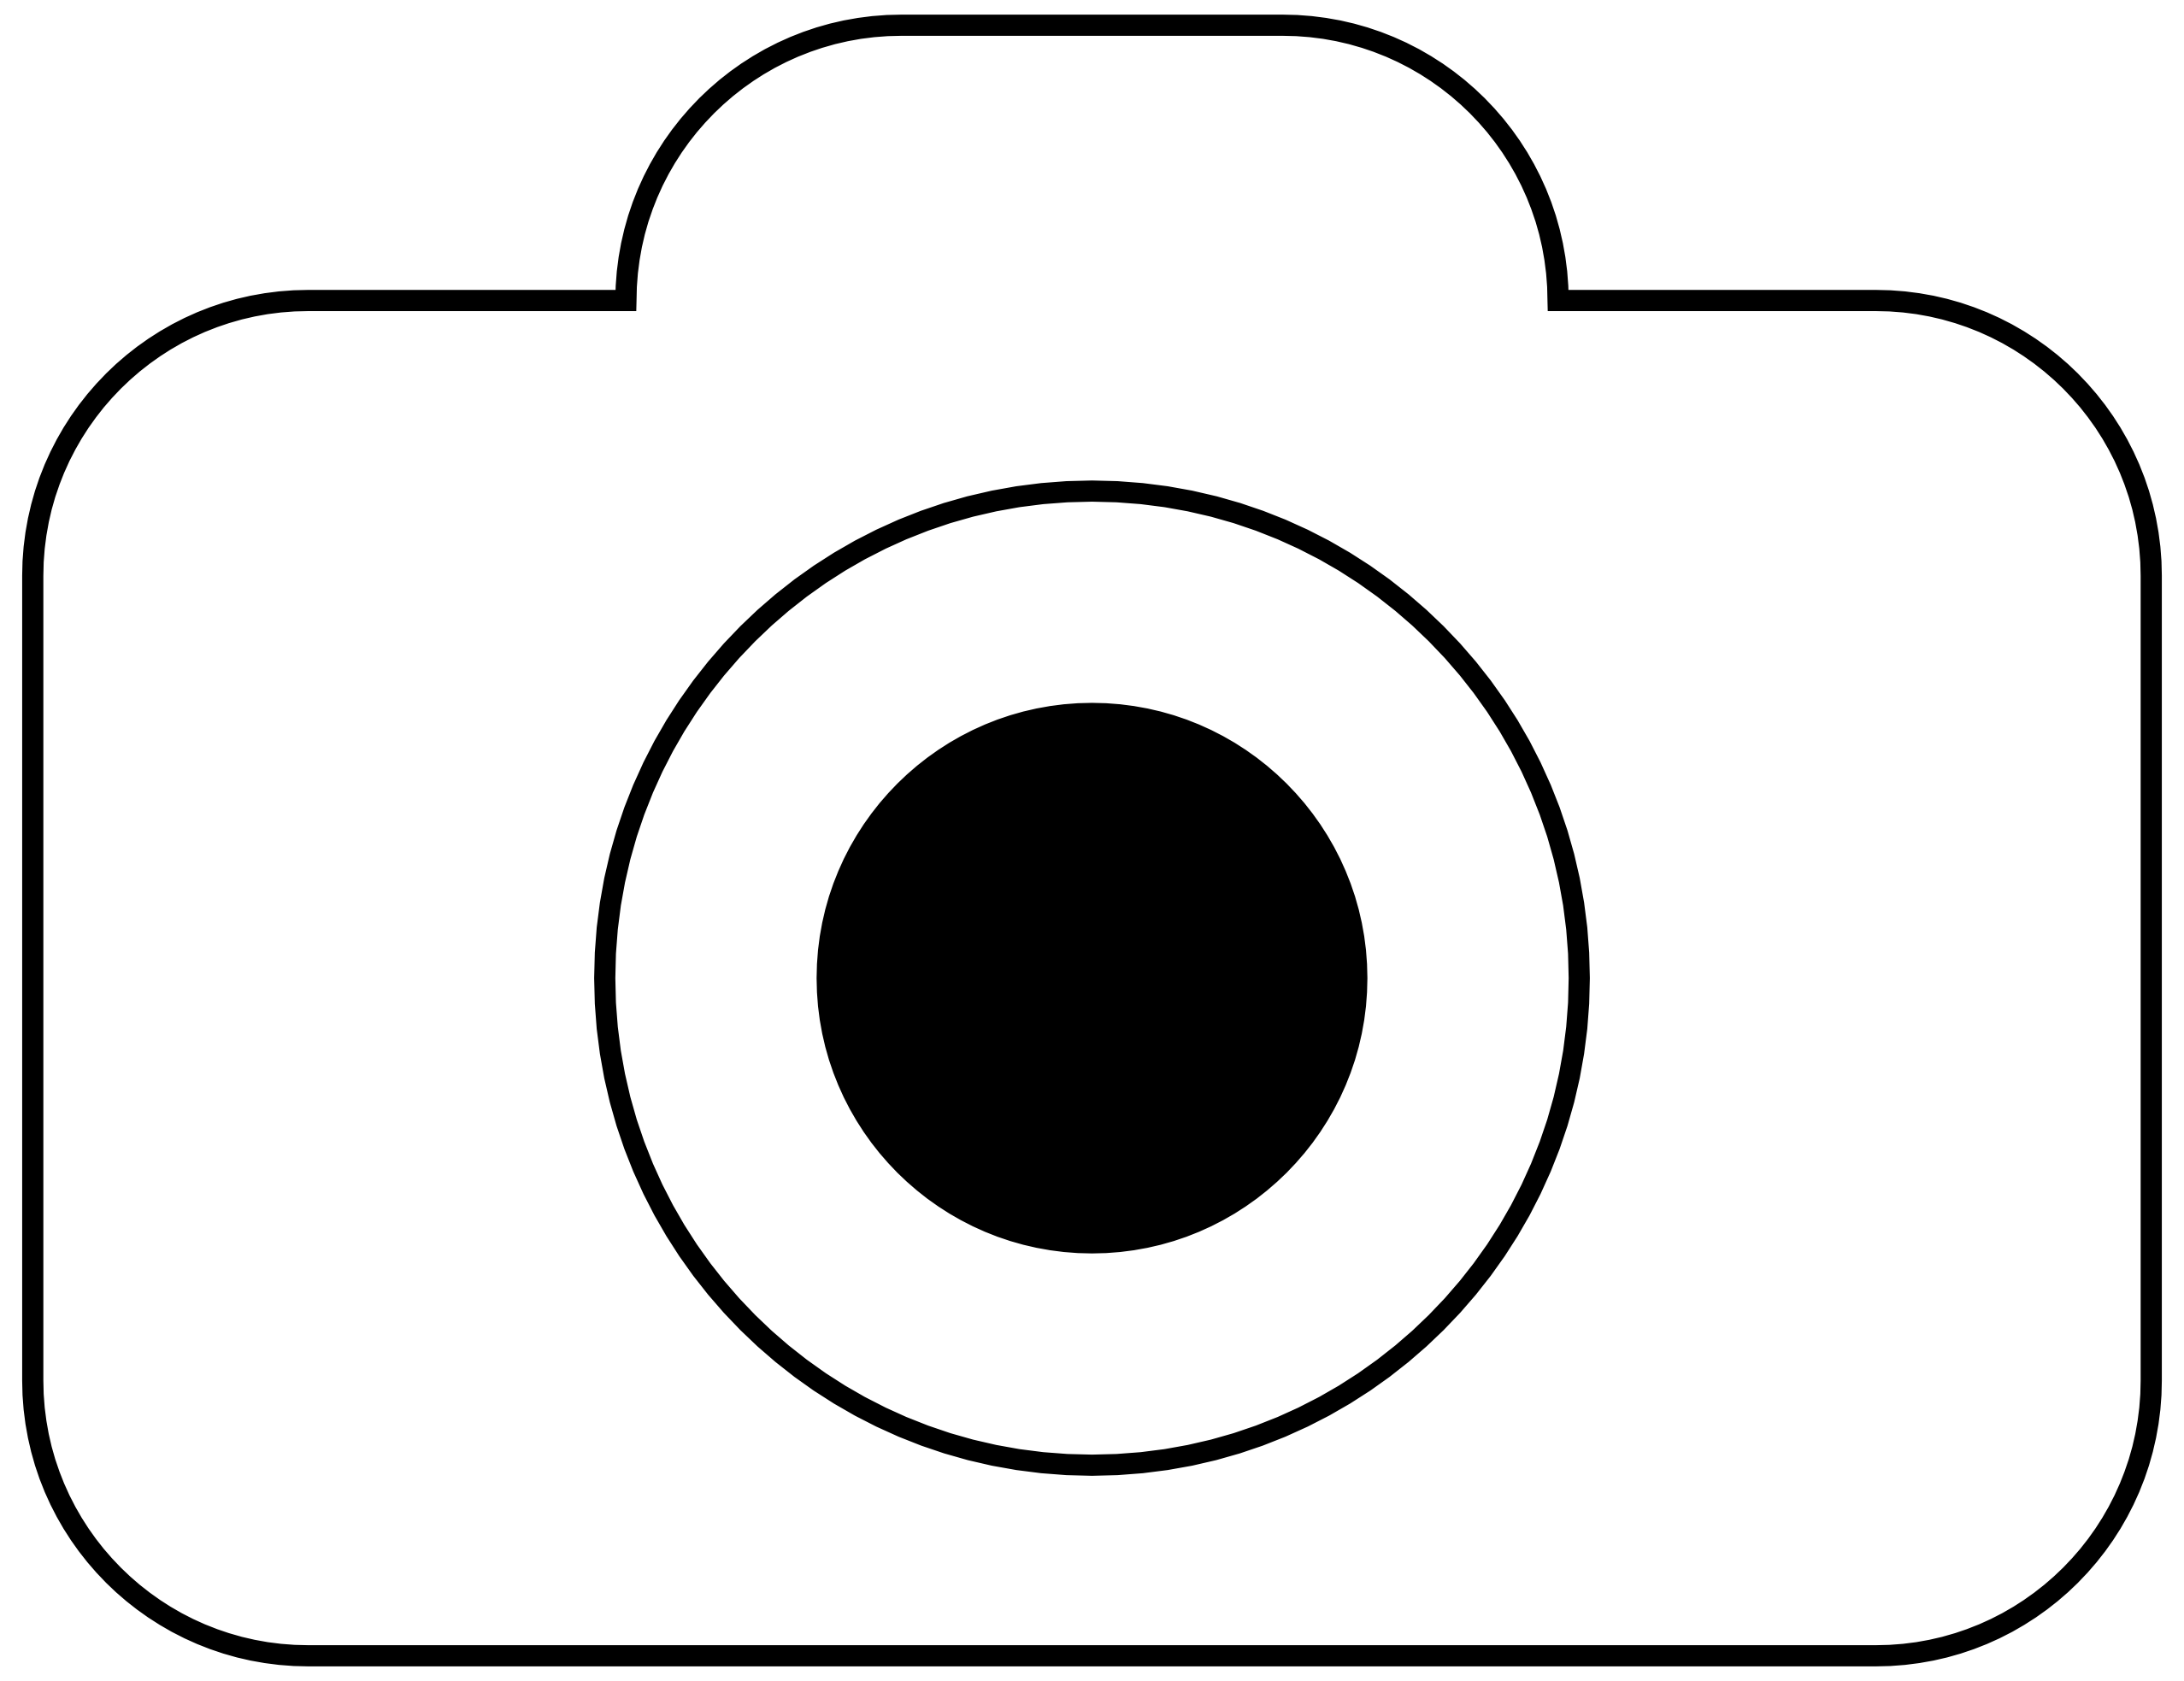 Camera Clipart Logo - ClipArt Best